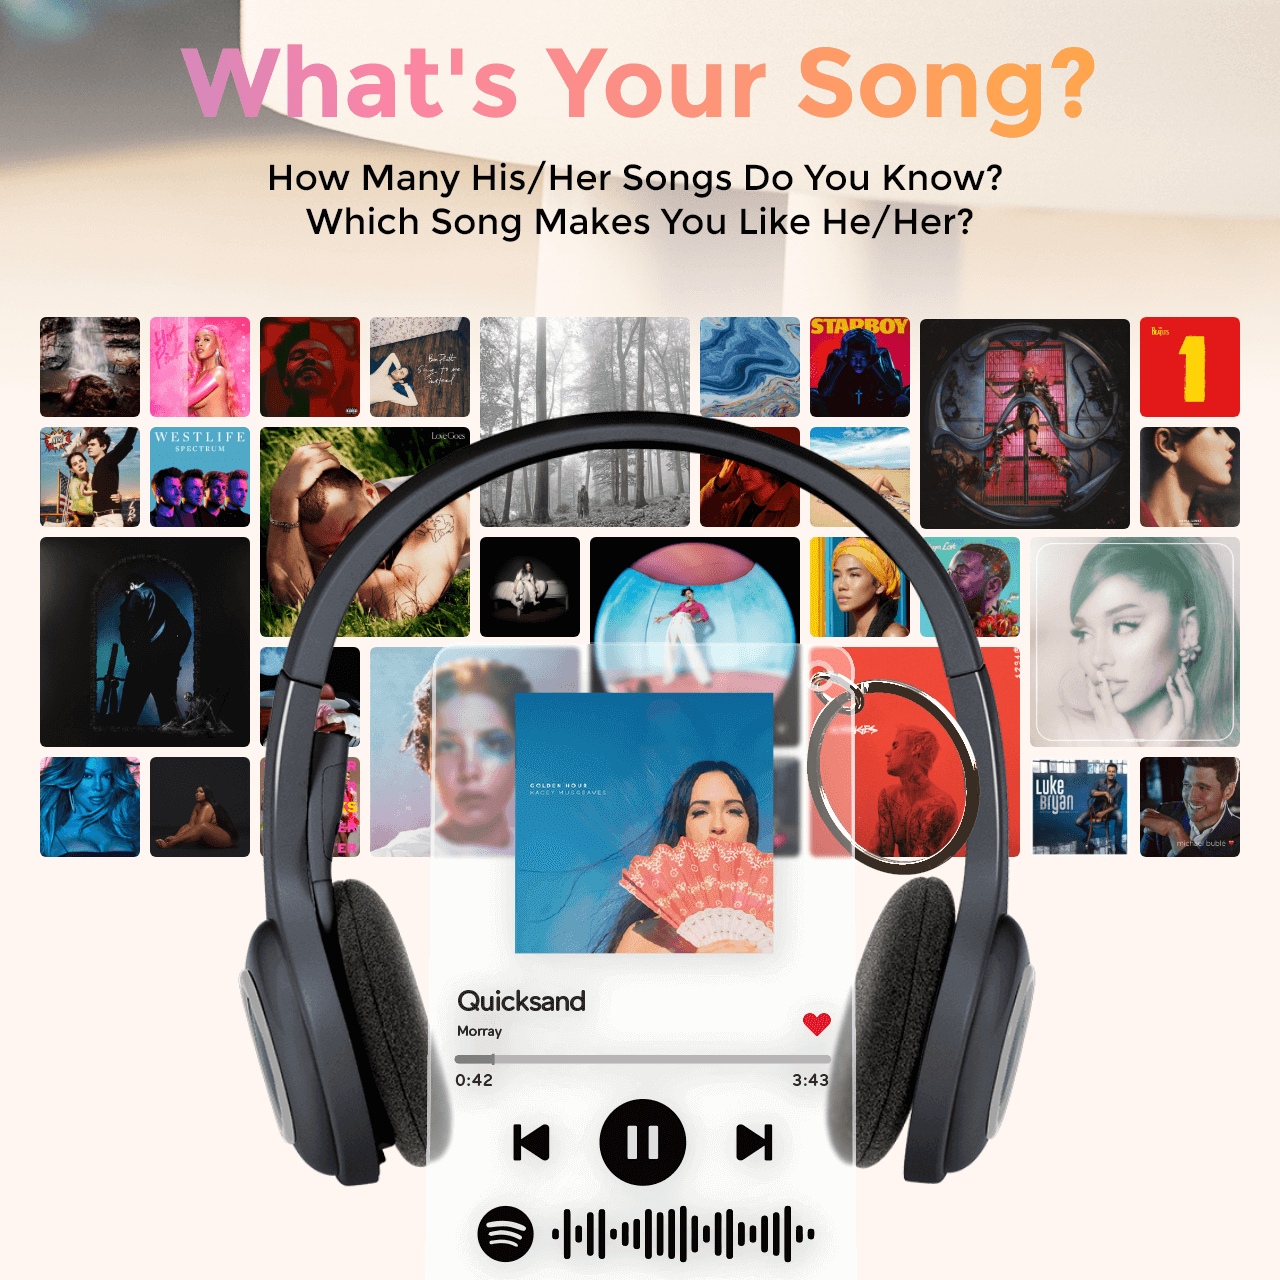 Spotify Custom Photo Scannable Music Plaque - myspotifyplaque